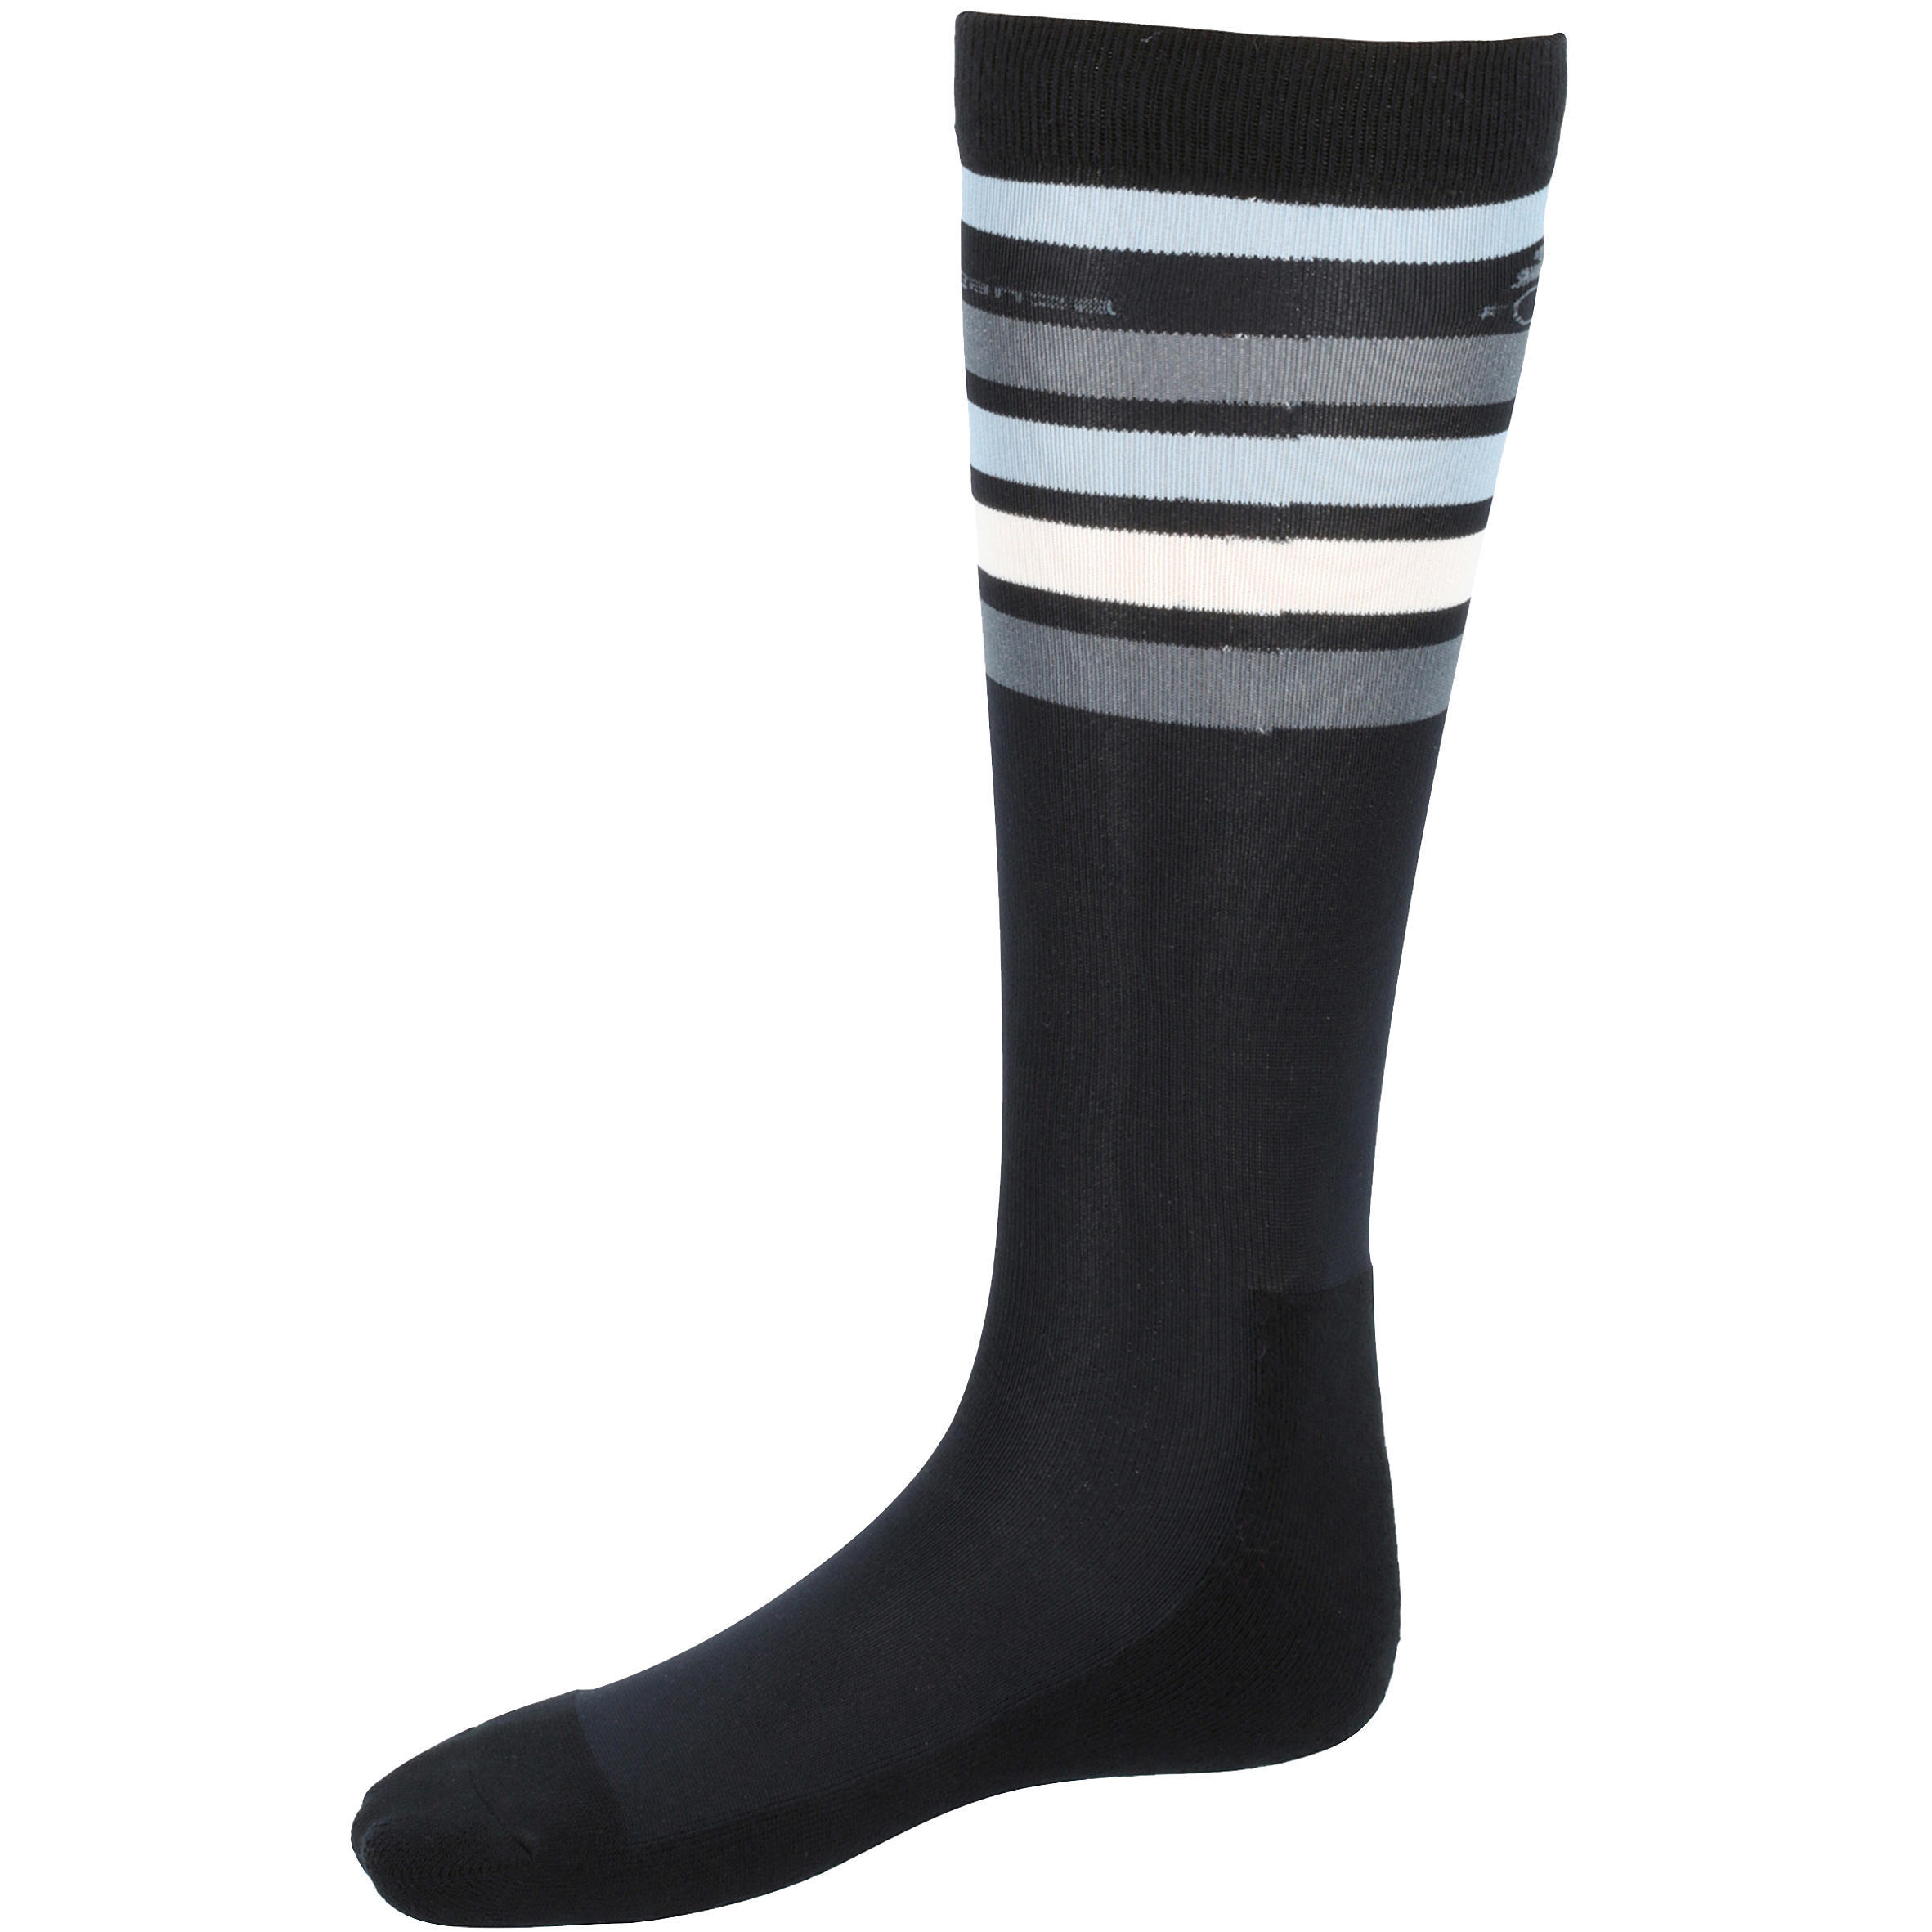 Adult Horse Riding Socks SKS100 - Black/White and Grey Stripes 2/6